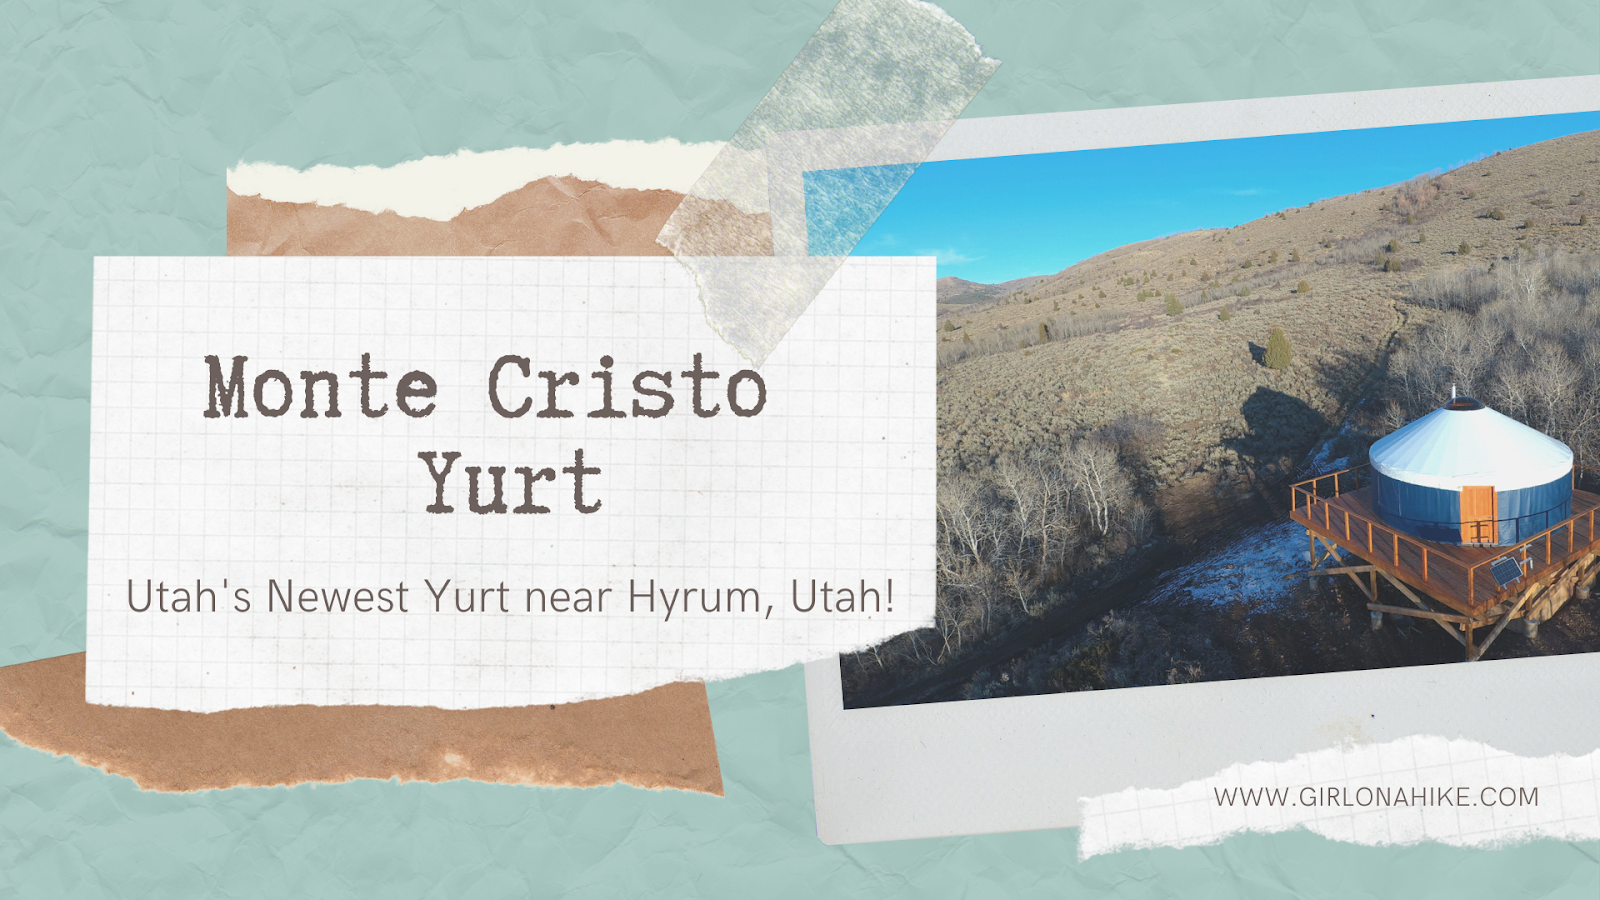 Monte Cristo Yurt, Yurts of Utah, Utah Yurts